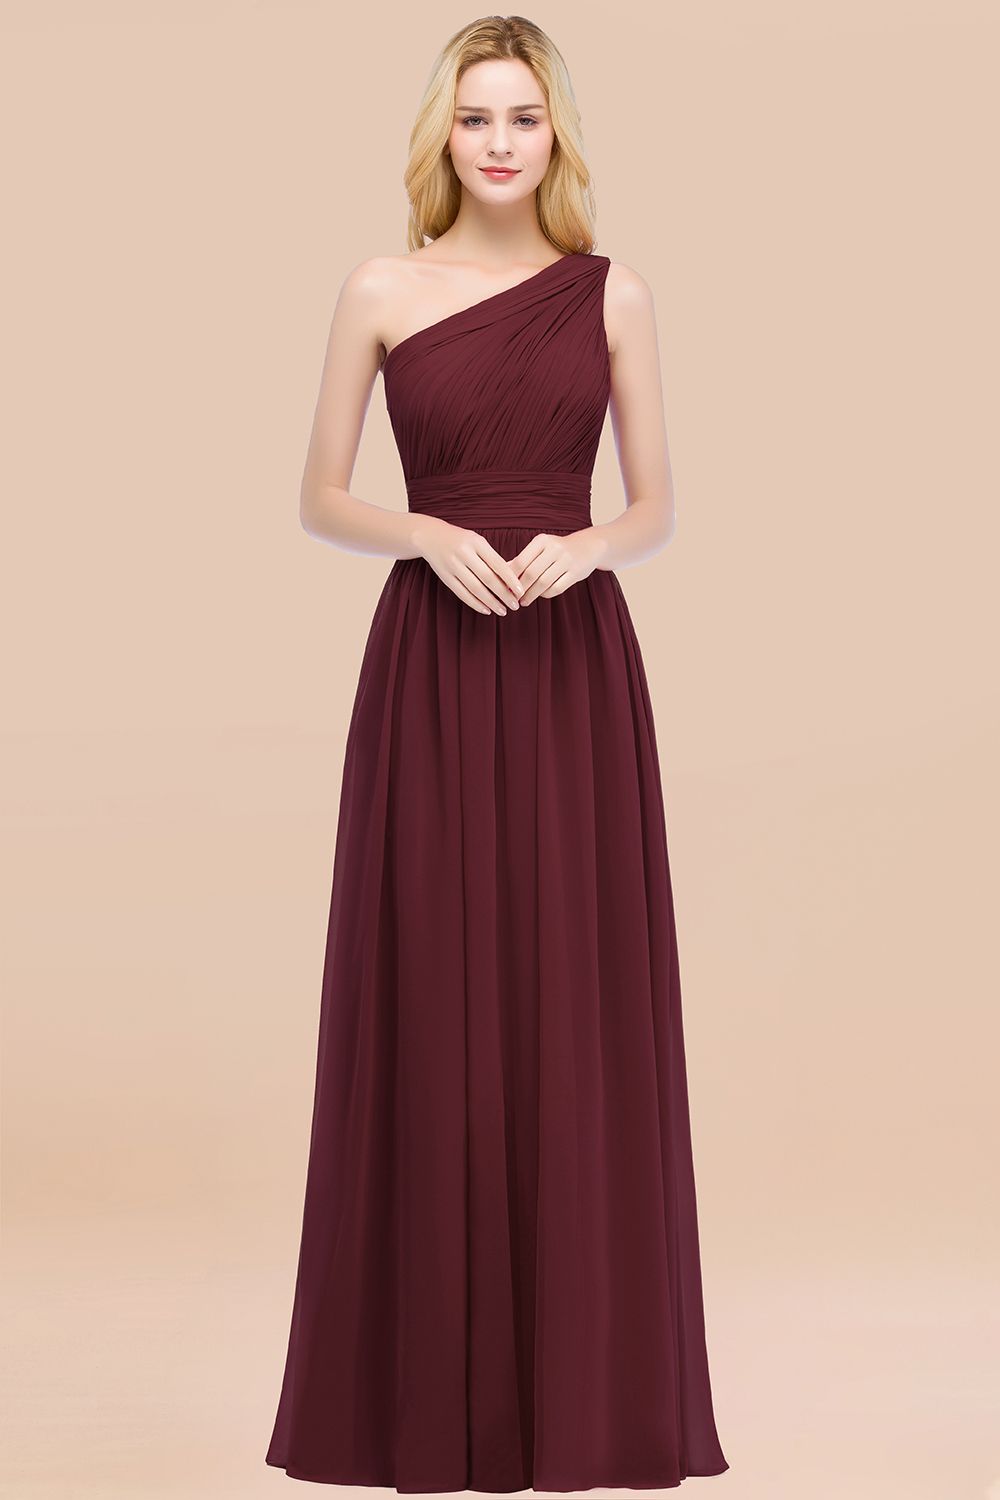 Chic One-shoulder Sleeveless Burgundy Chiffon Bridesmaid Dresses Online-27dress